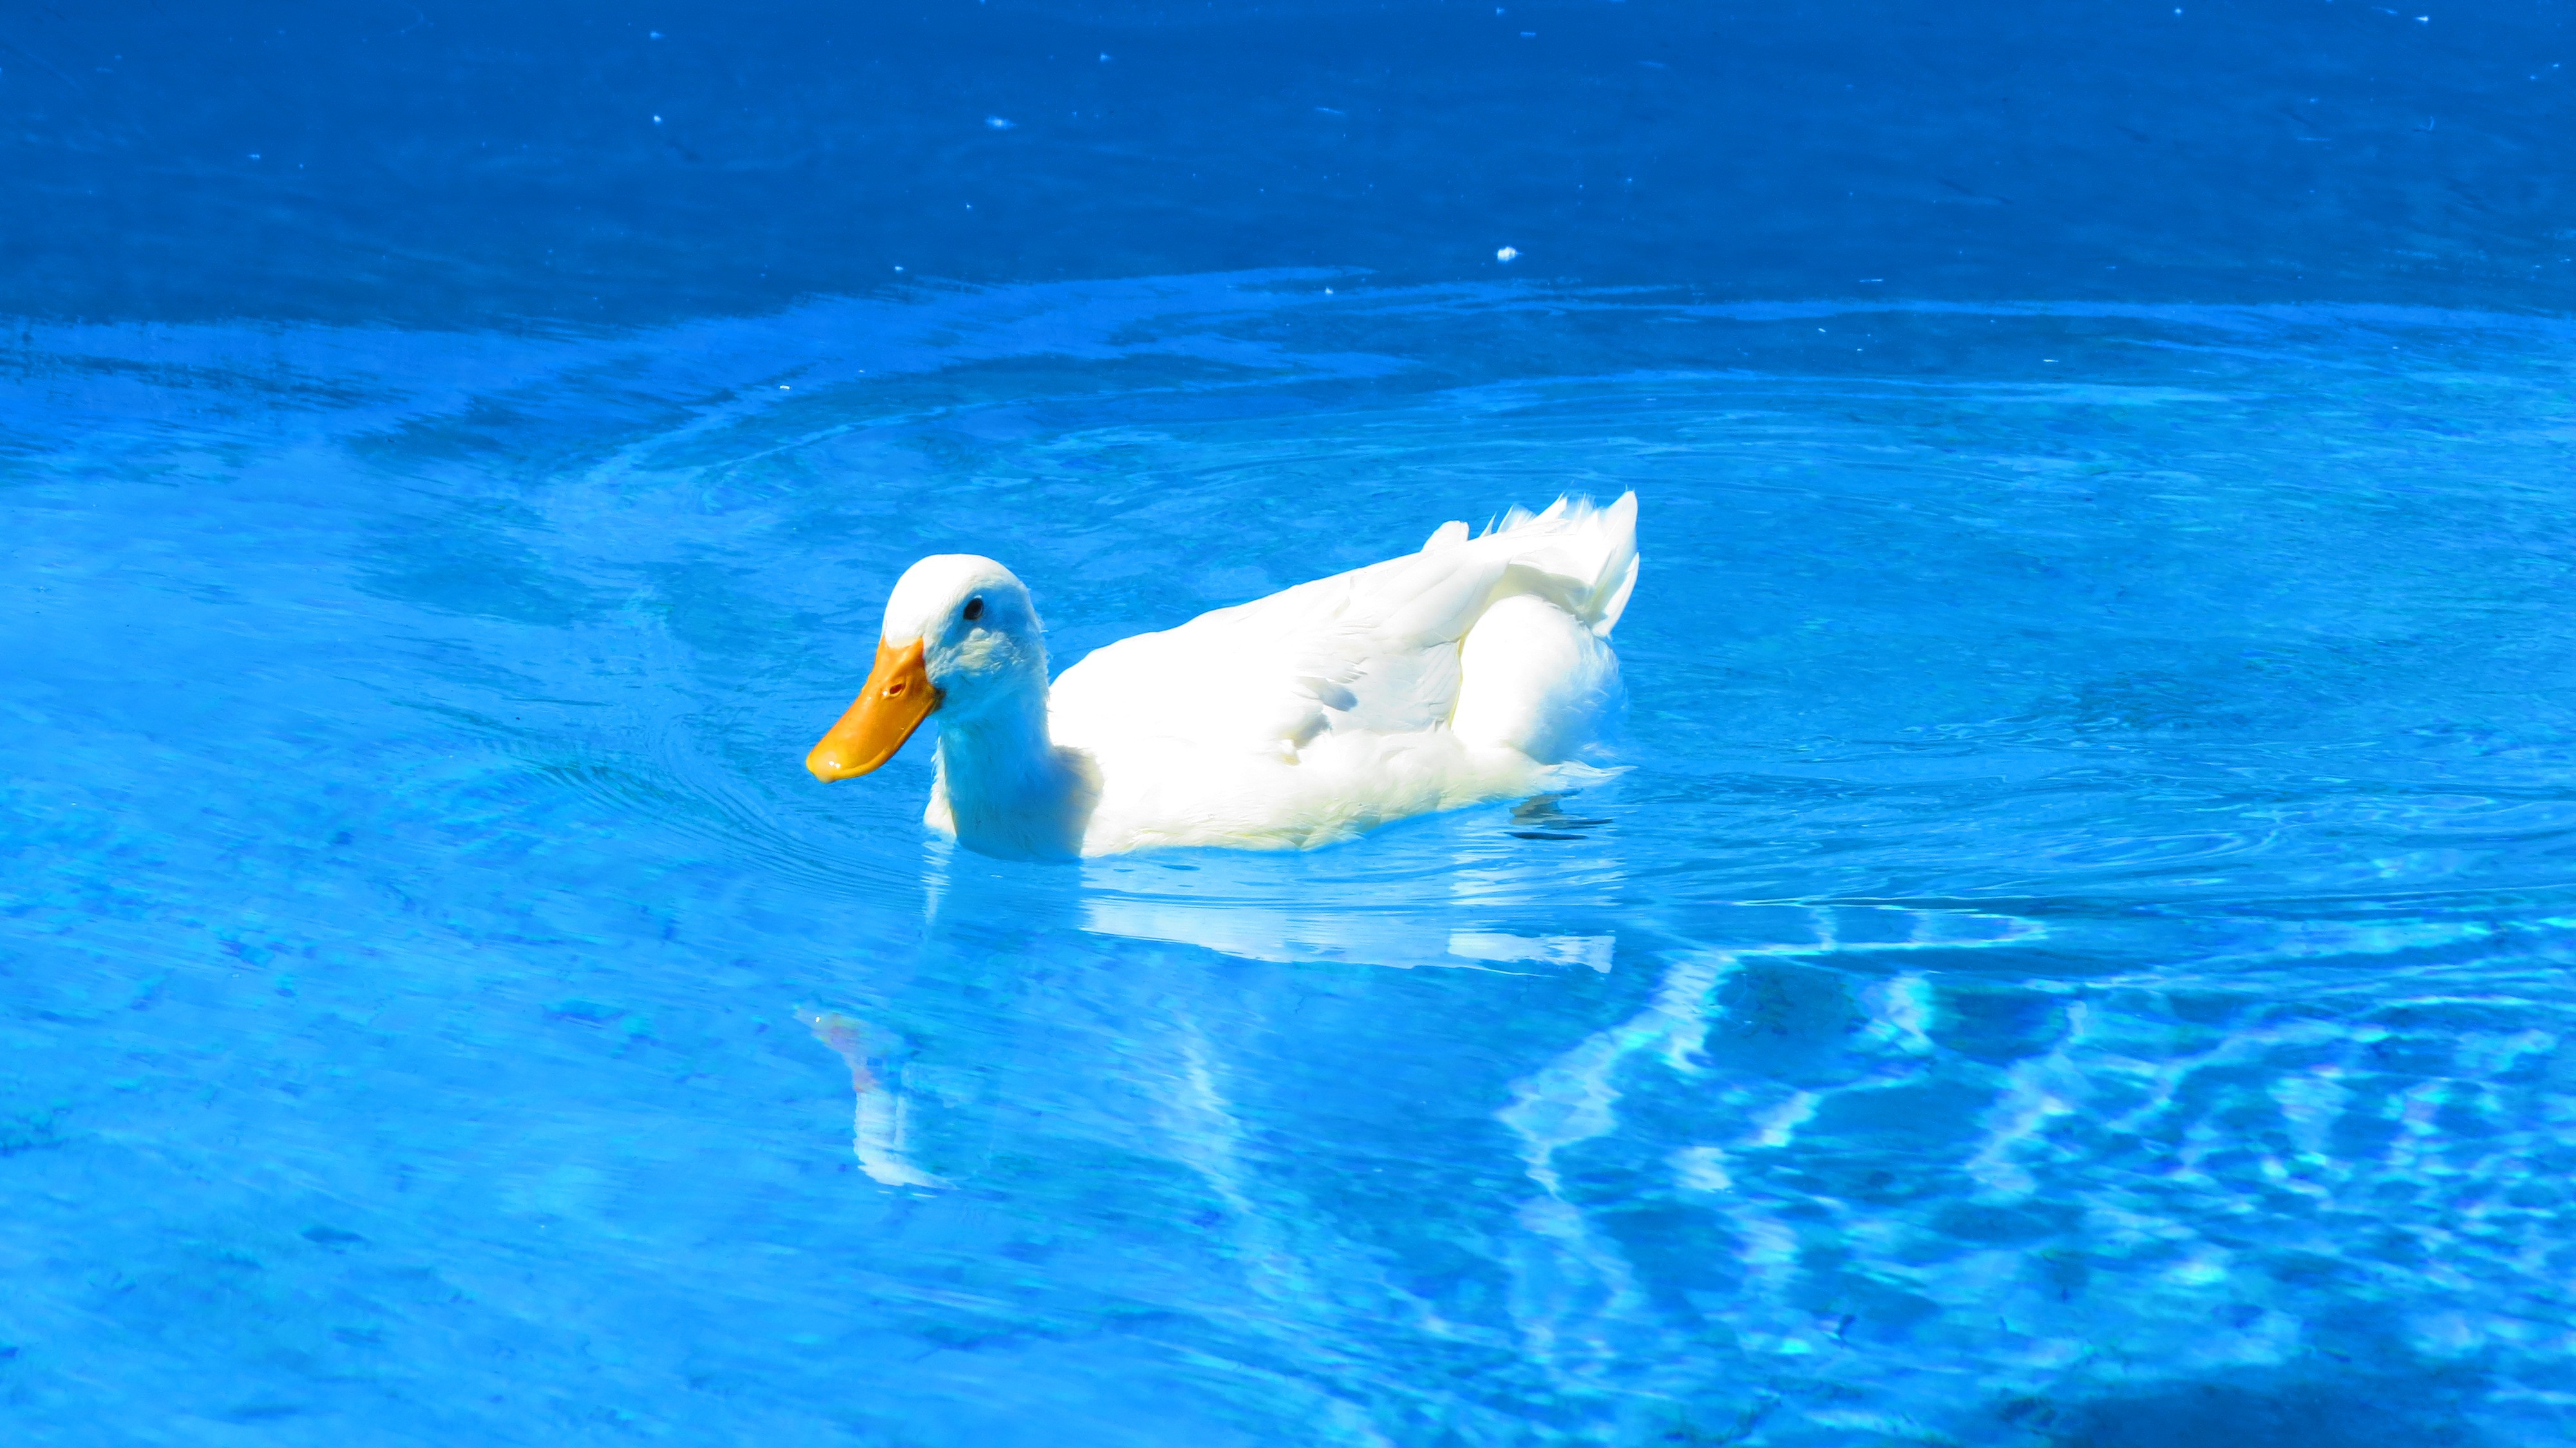 General 4000x2248 duck swimming swimming pool water sunlight bright waves animals minimalism white blue birds